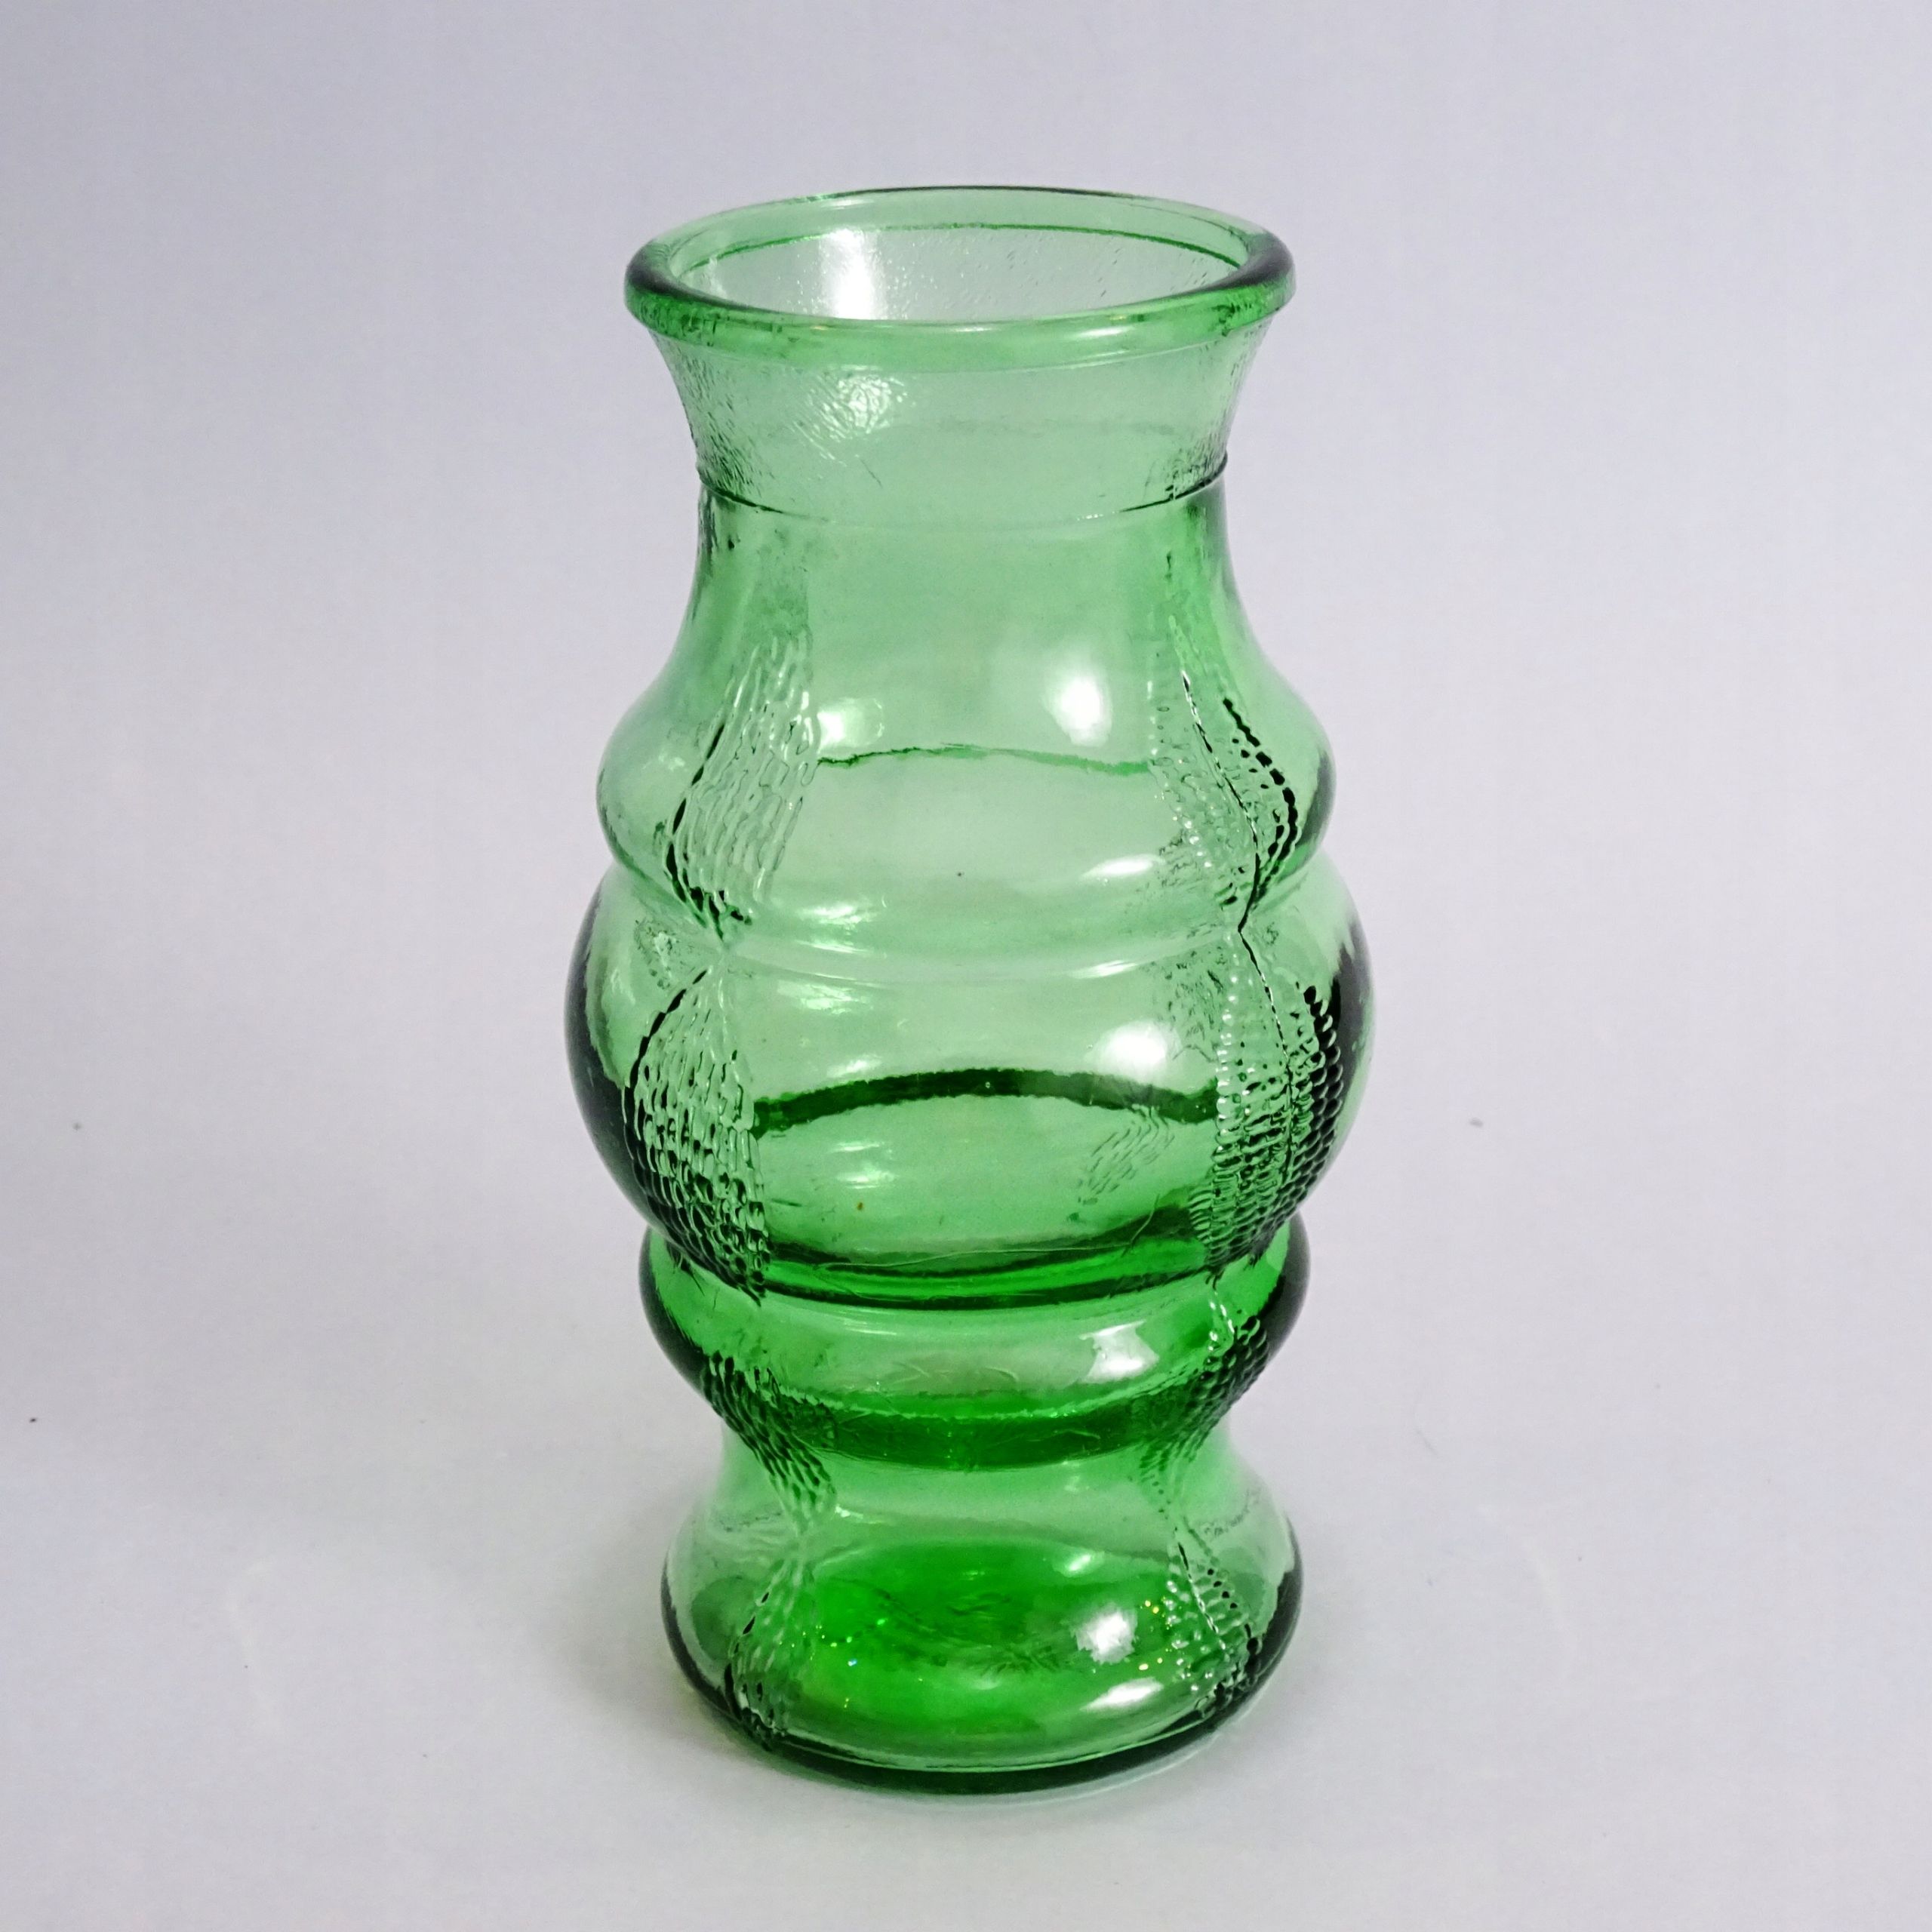 nrd lata 60/70 zielony szklany wazon